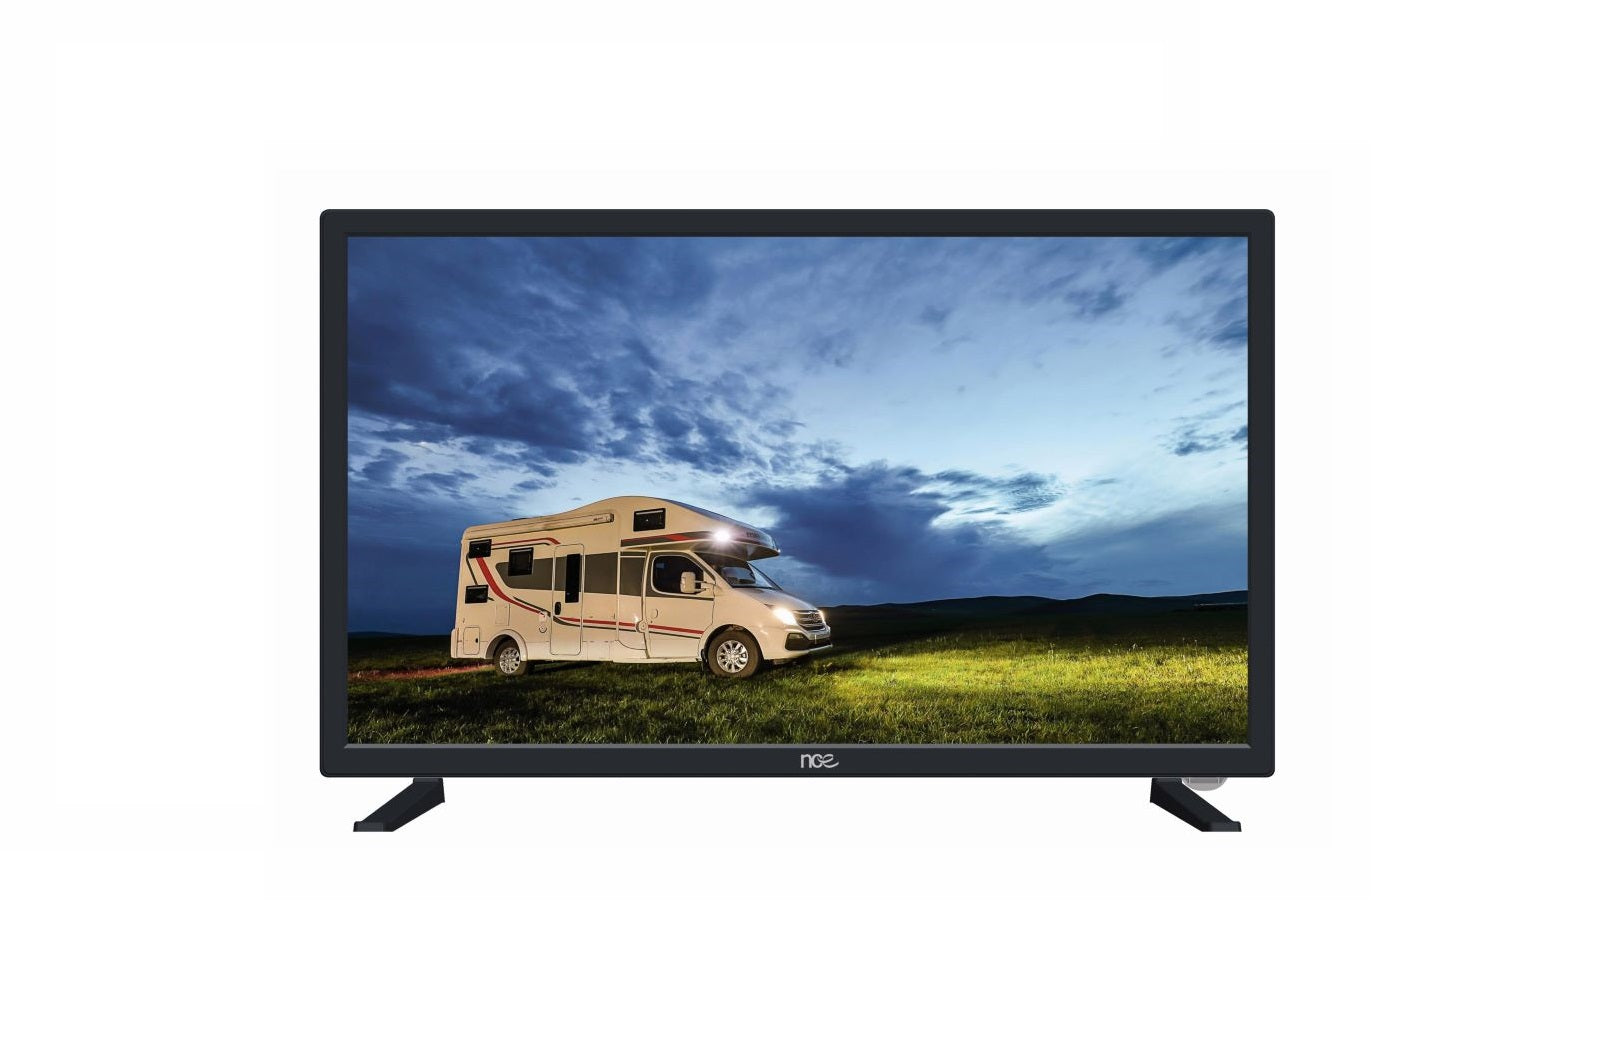 24 inch WebOS Smart TV – The RV & Marine Warehouse